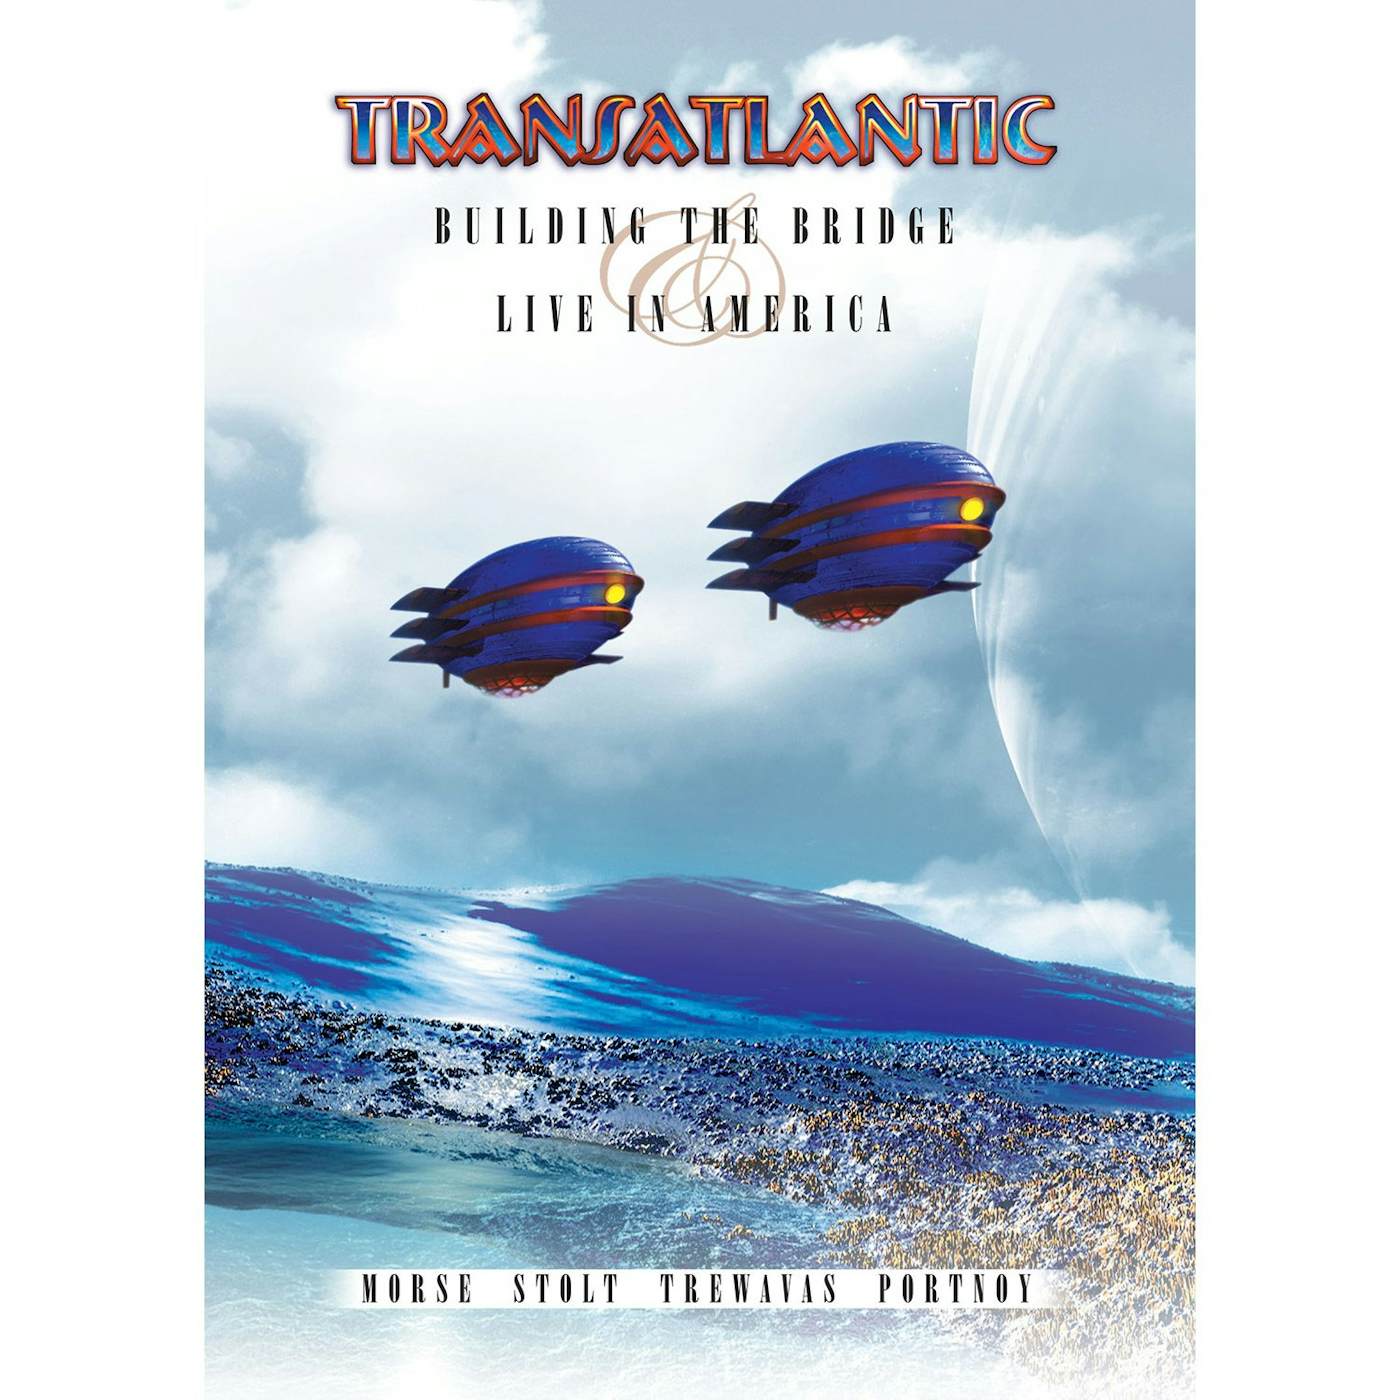 Transatlantic "Building The Bridge & Live In America" 2xDVD